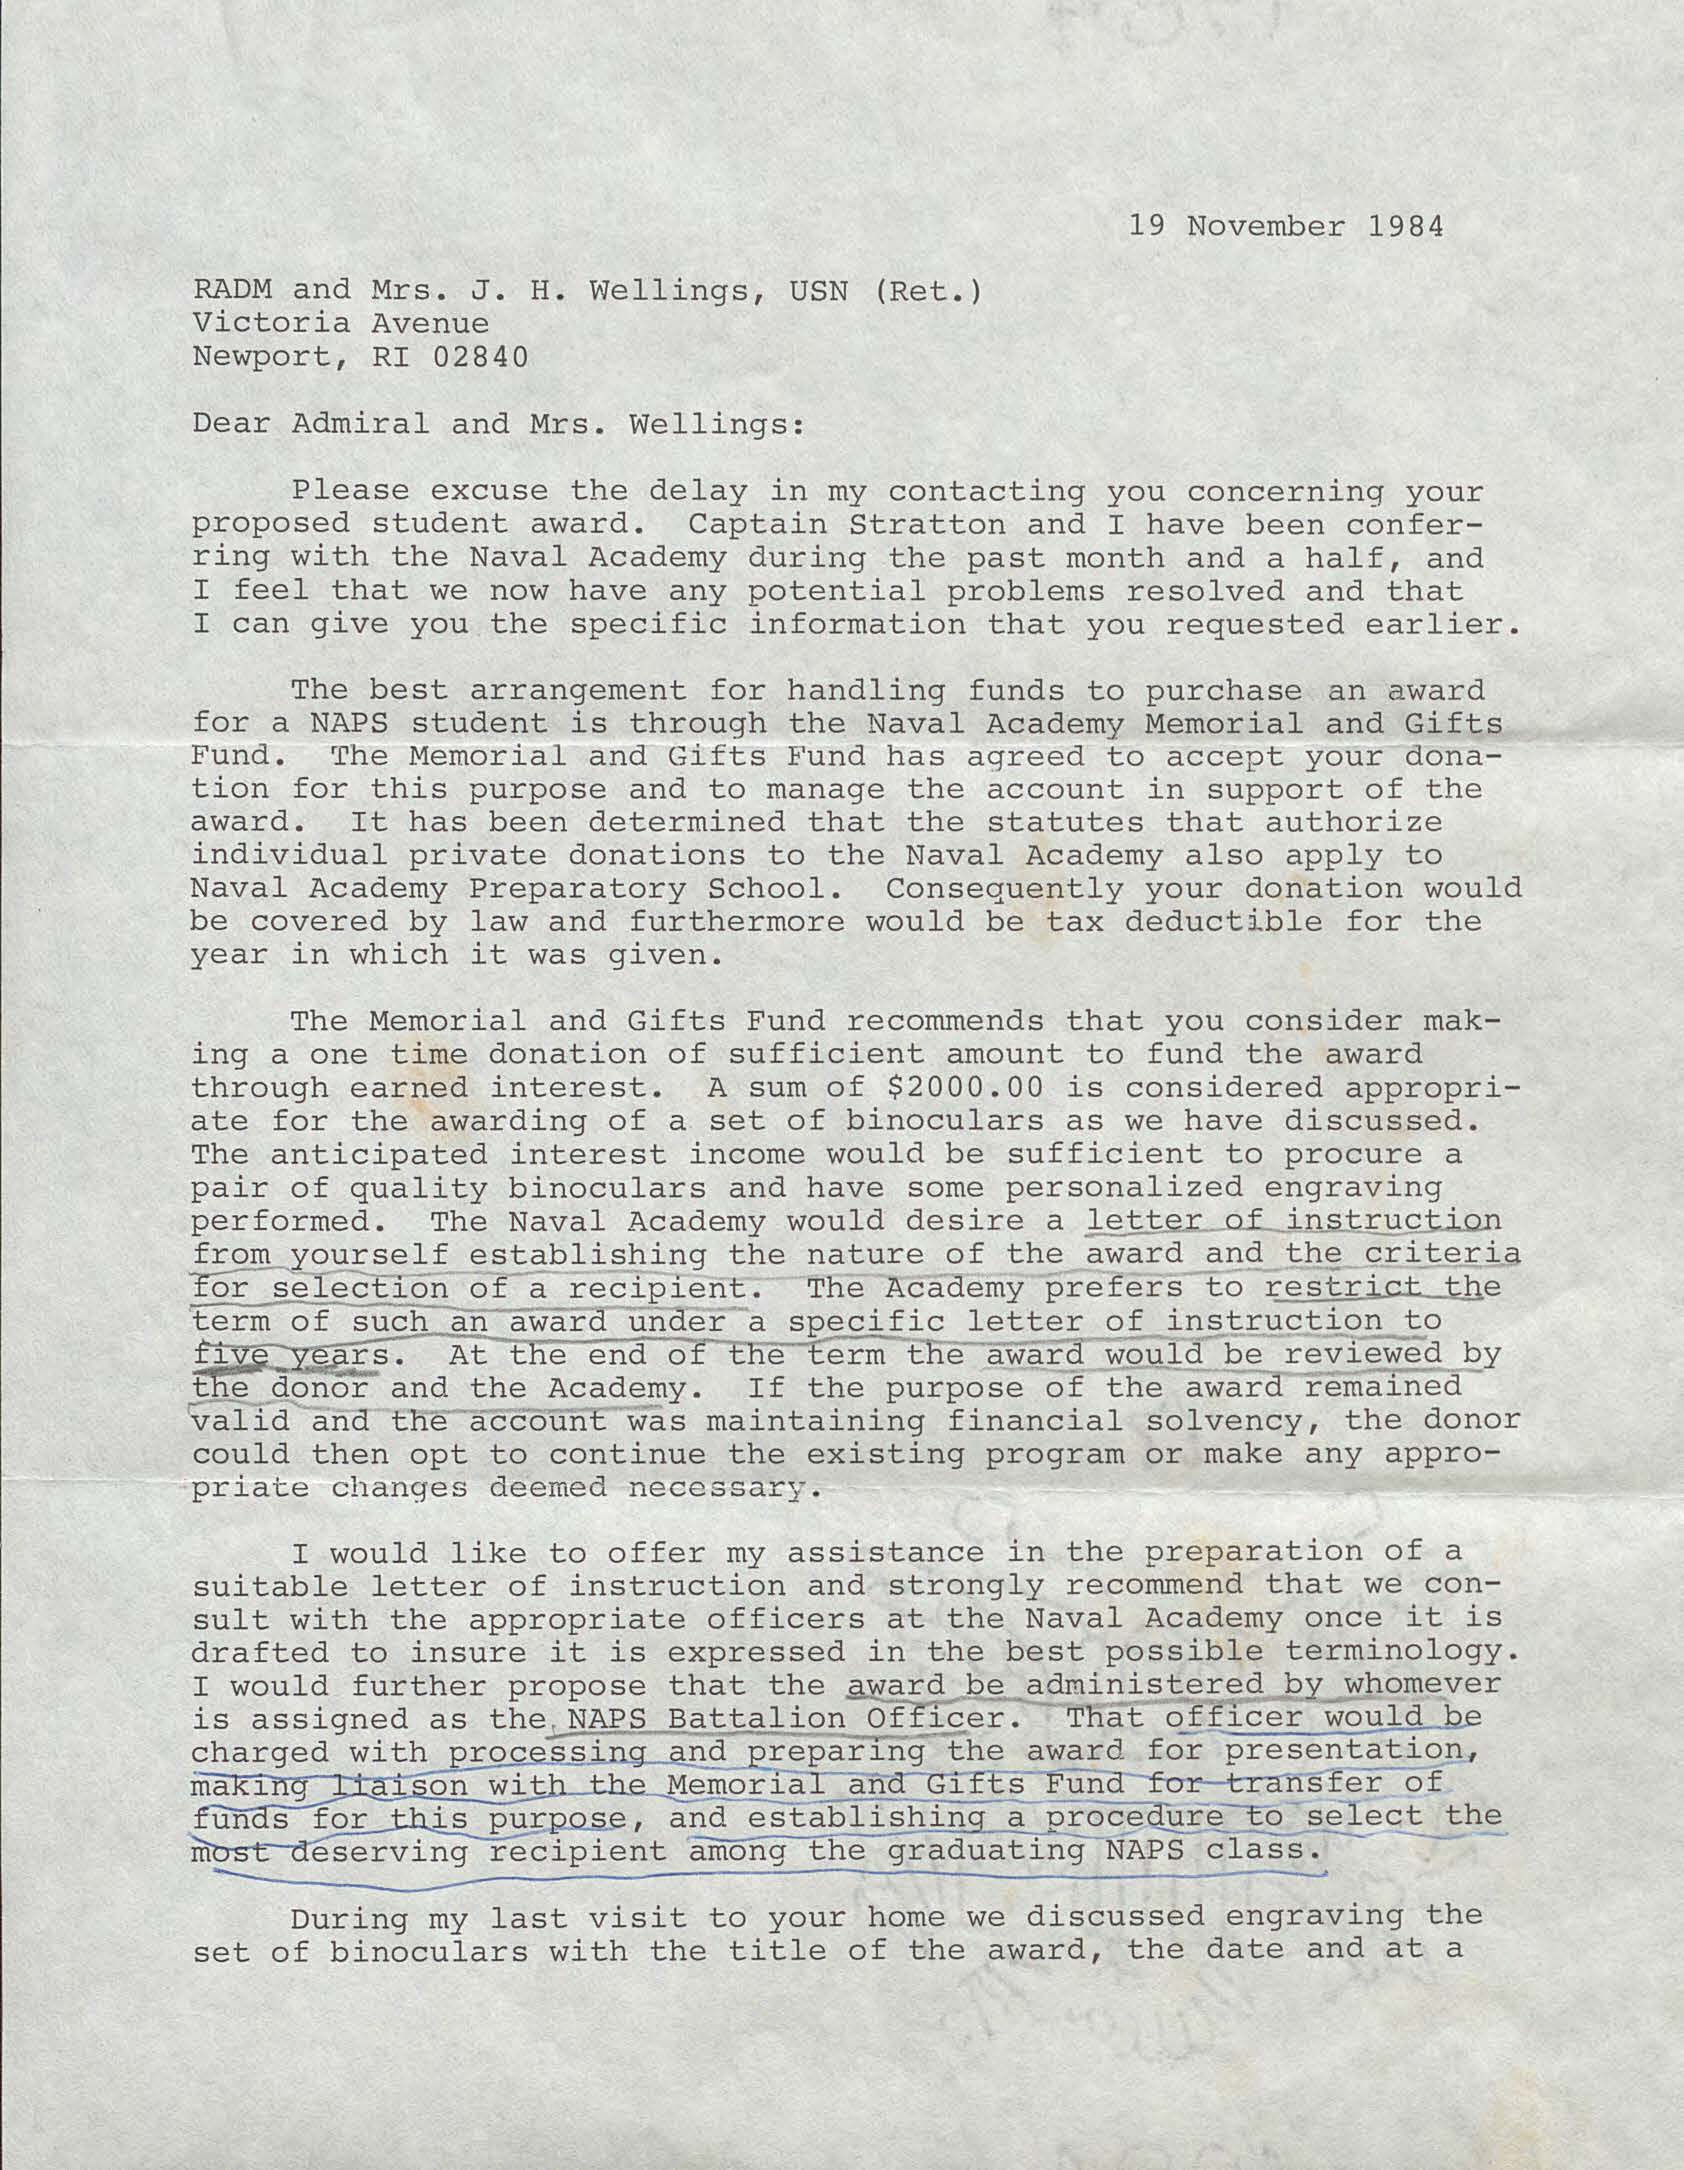 Letter from Major Dick Kokko, USMC to RADM and Mrs. Joseph H. Wellings